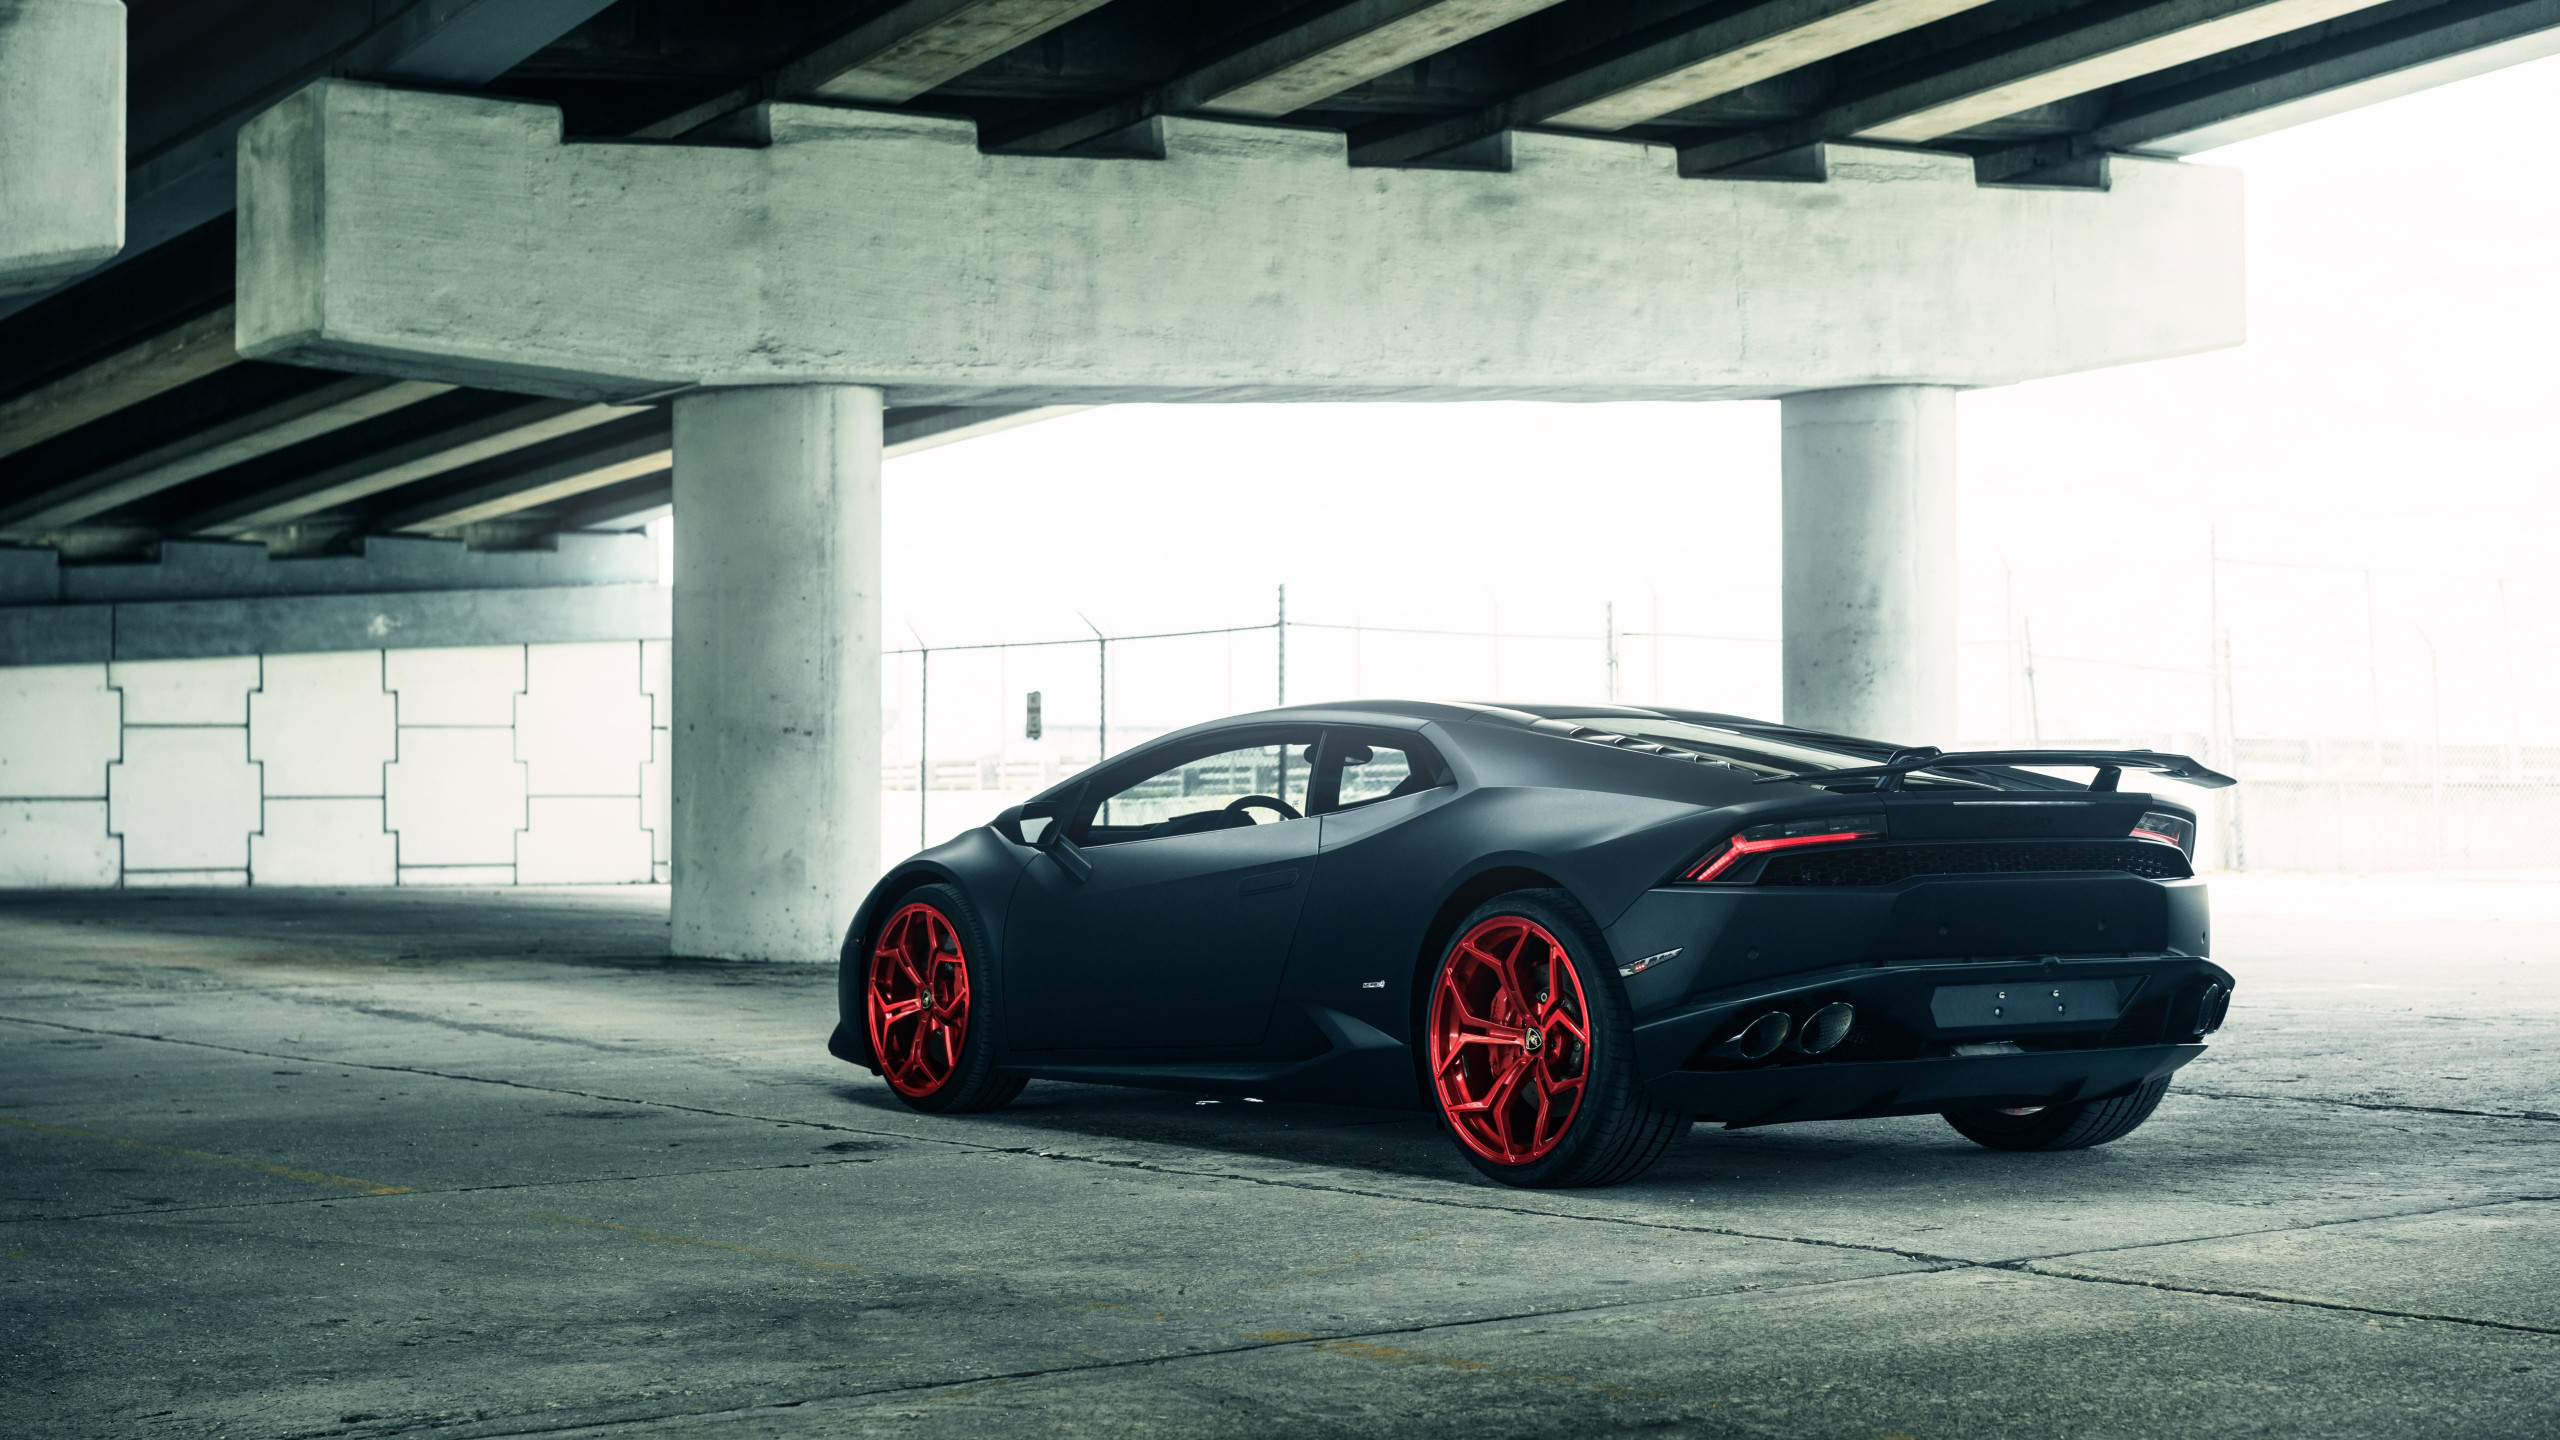 Vellano Matte Black Lamborghini Huracan on Red 3 wallpaper 2560x1440